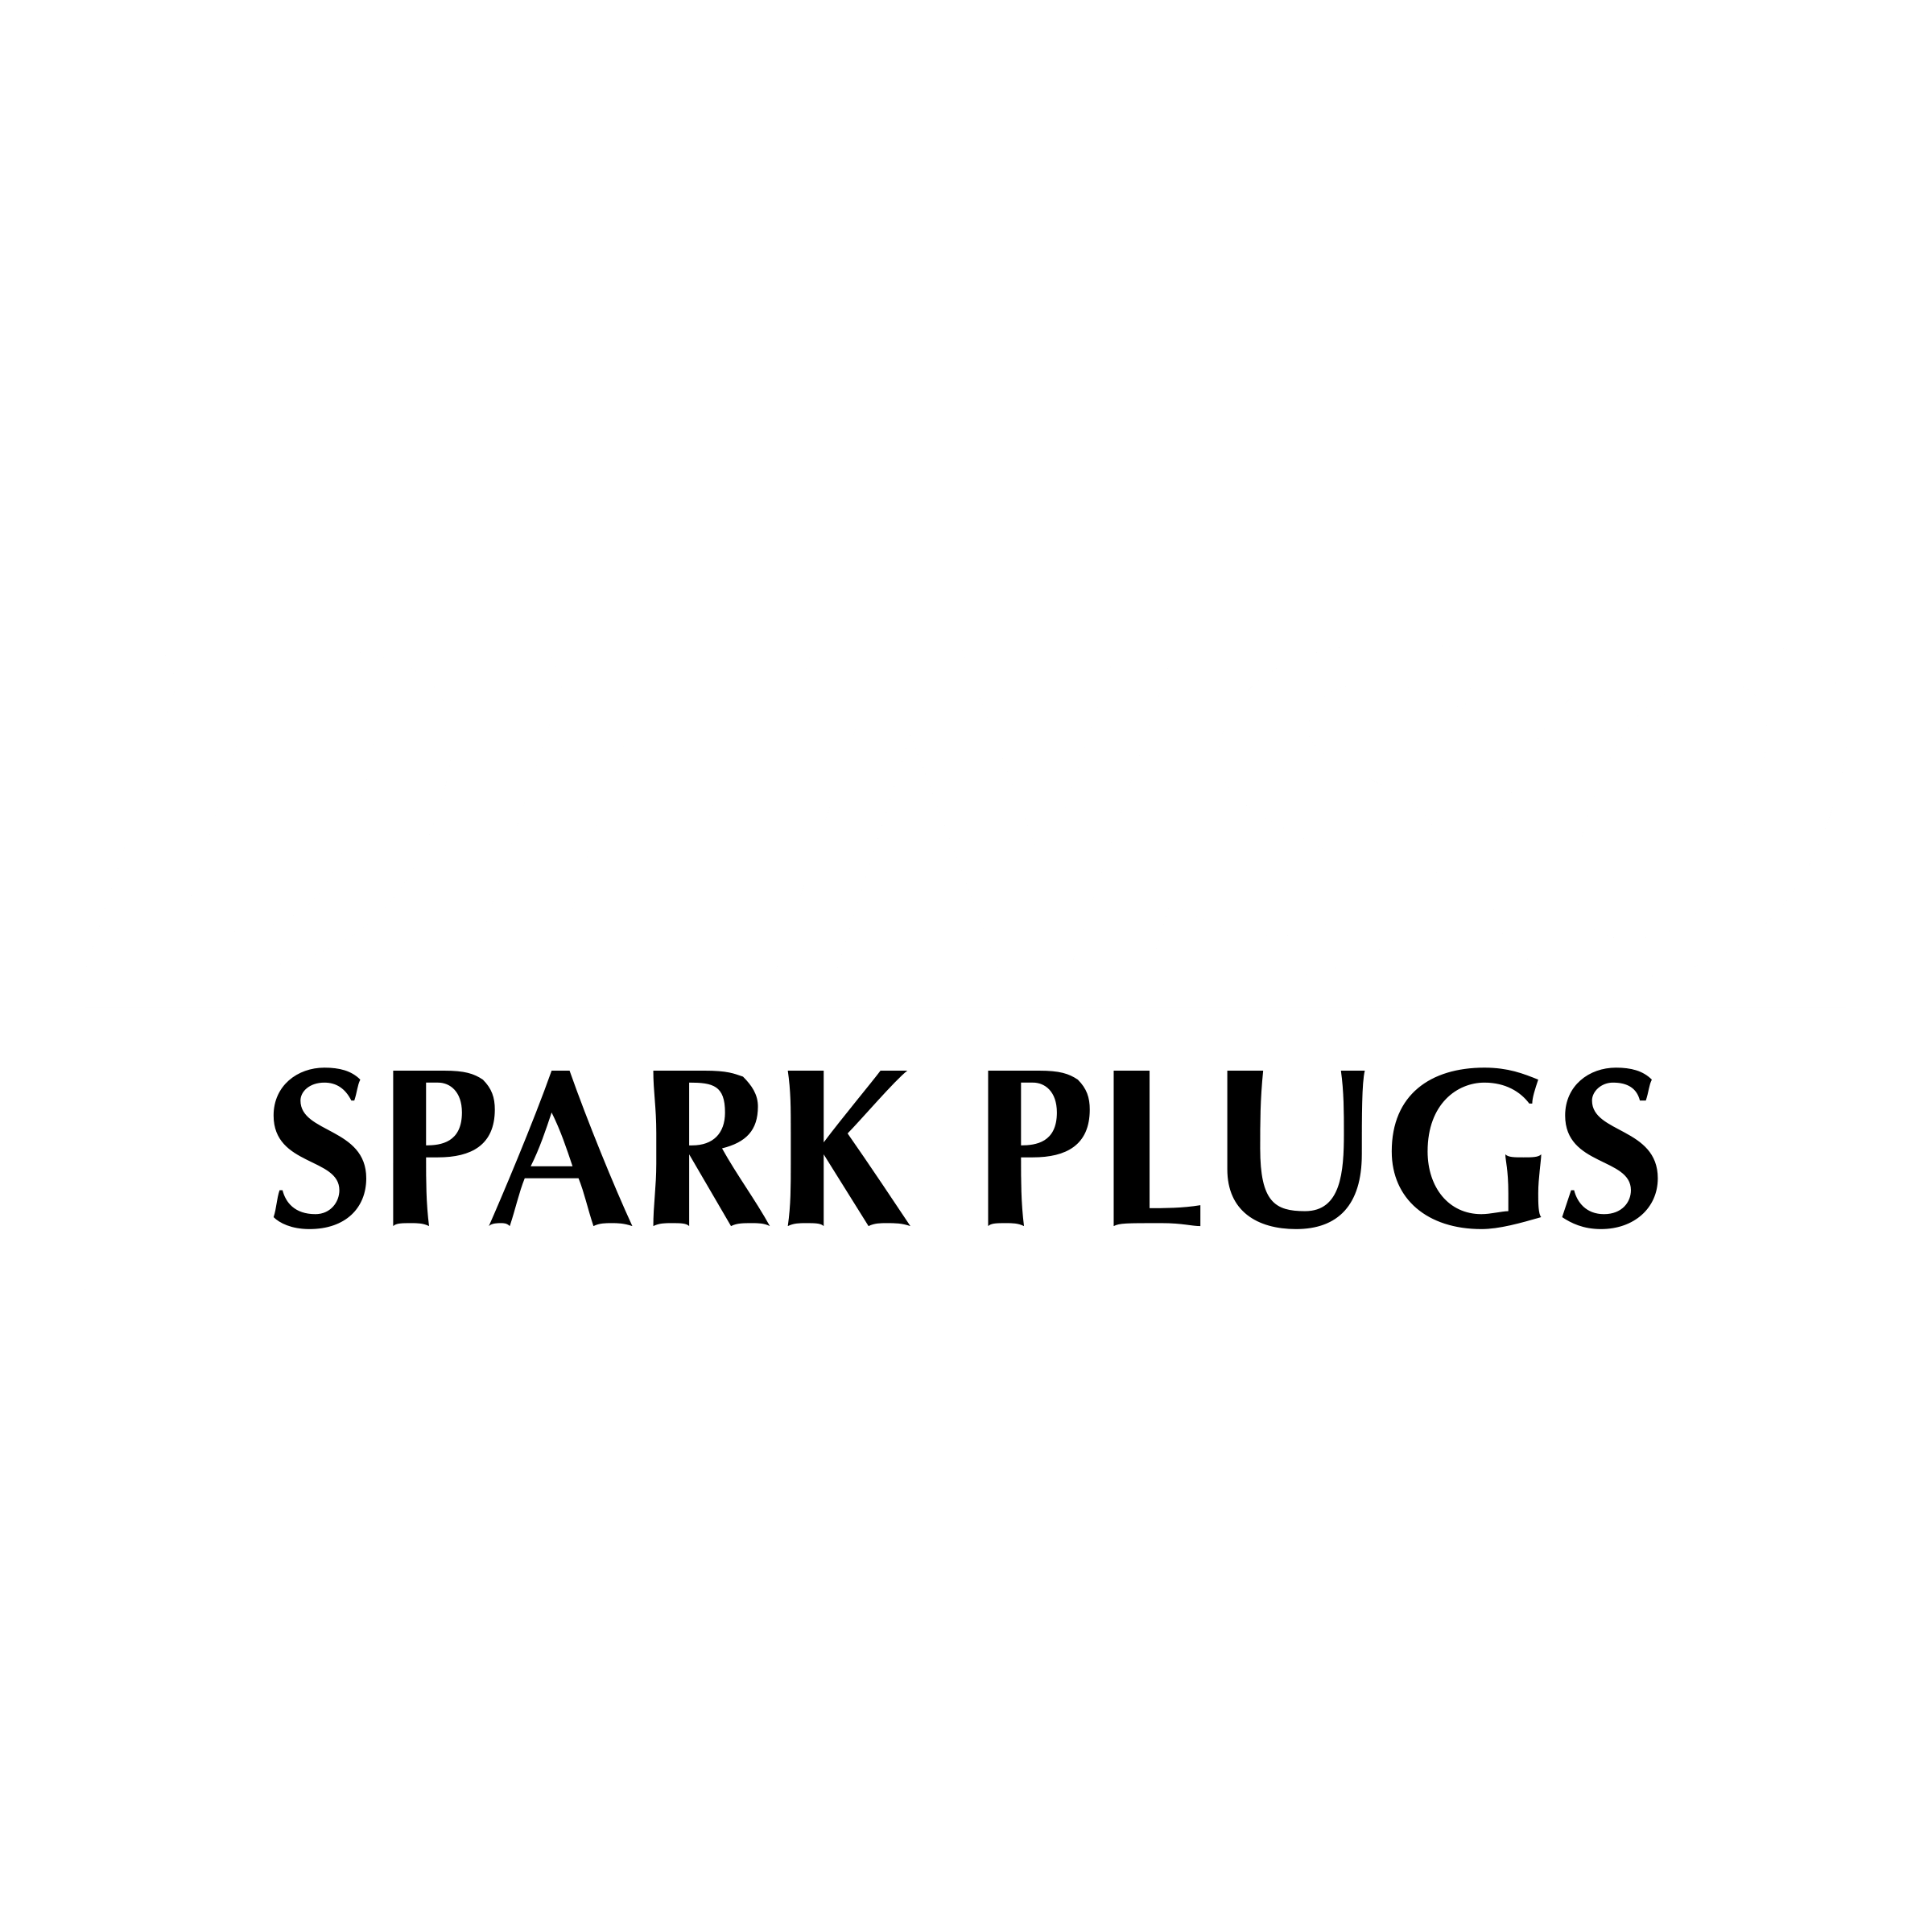 Denso Logo - Denso Logo PNG Transparent & SVG Vector